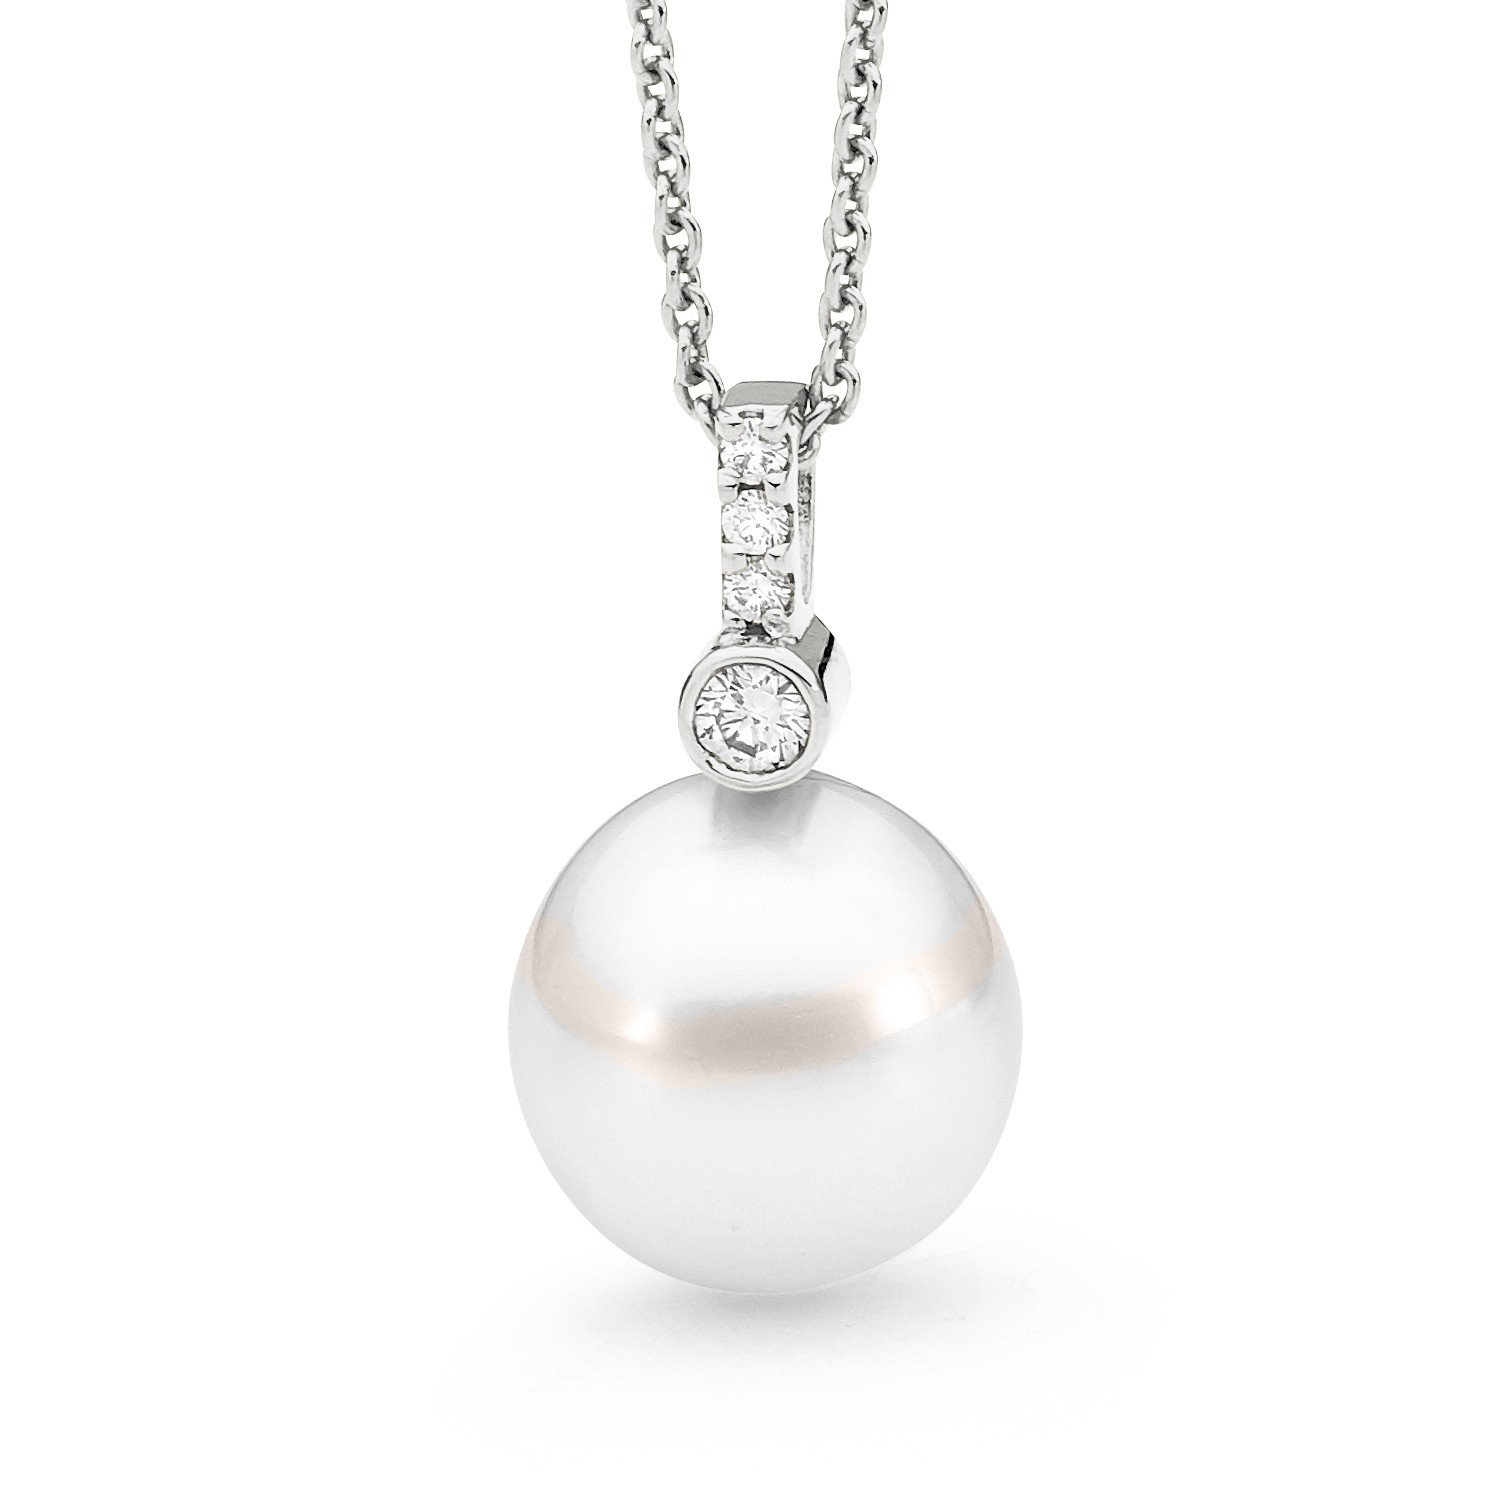 Channel and Bezel Set Diamond Pendant - Allure South Sea Pearls